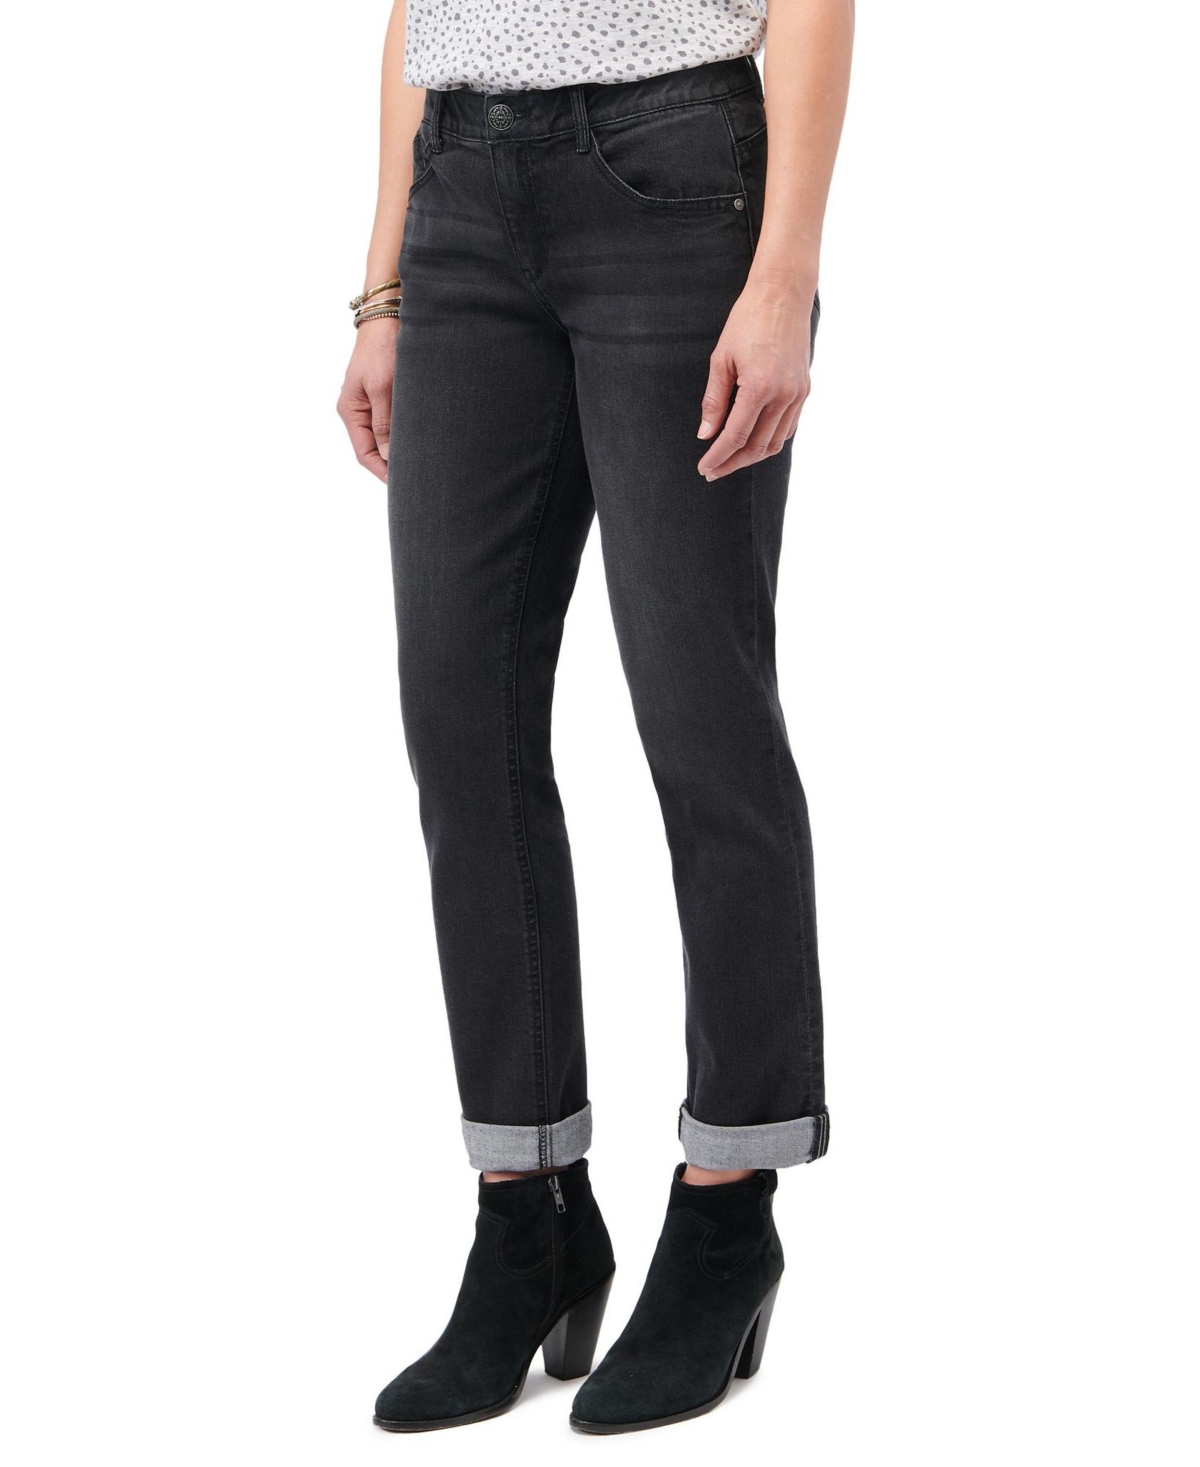 Women's Ab Solution Girlfriend Jeans - Washed Black Artisanal